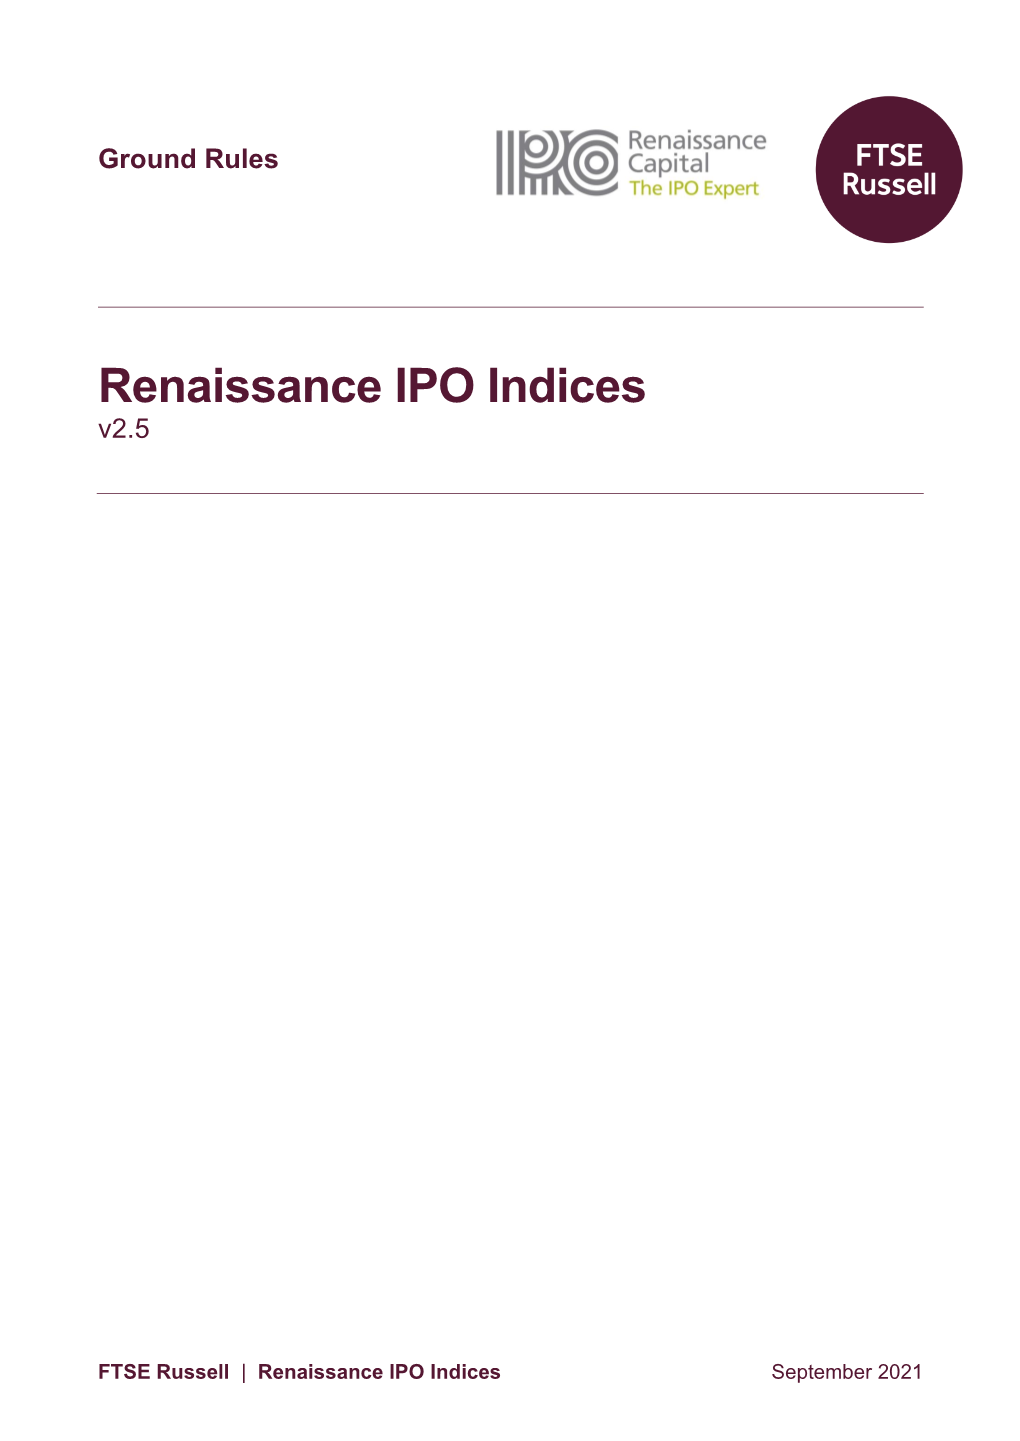 Renaissance IPO Indices V2.5